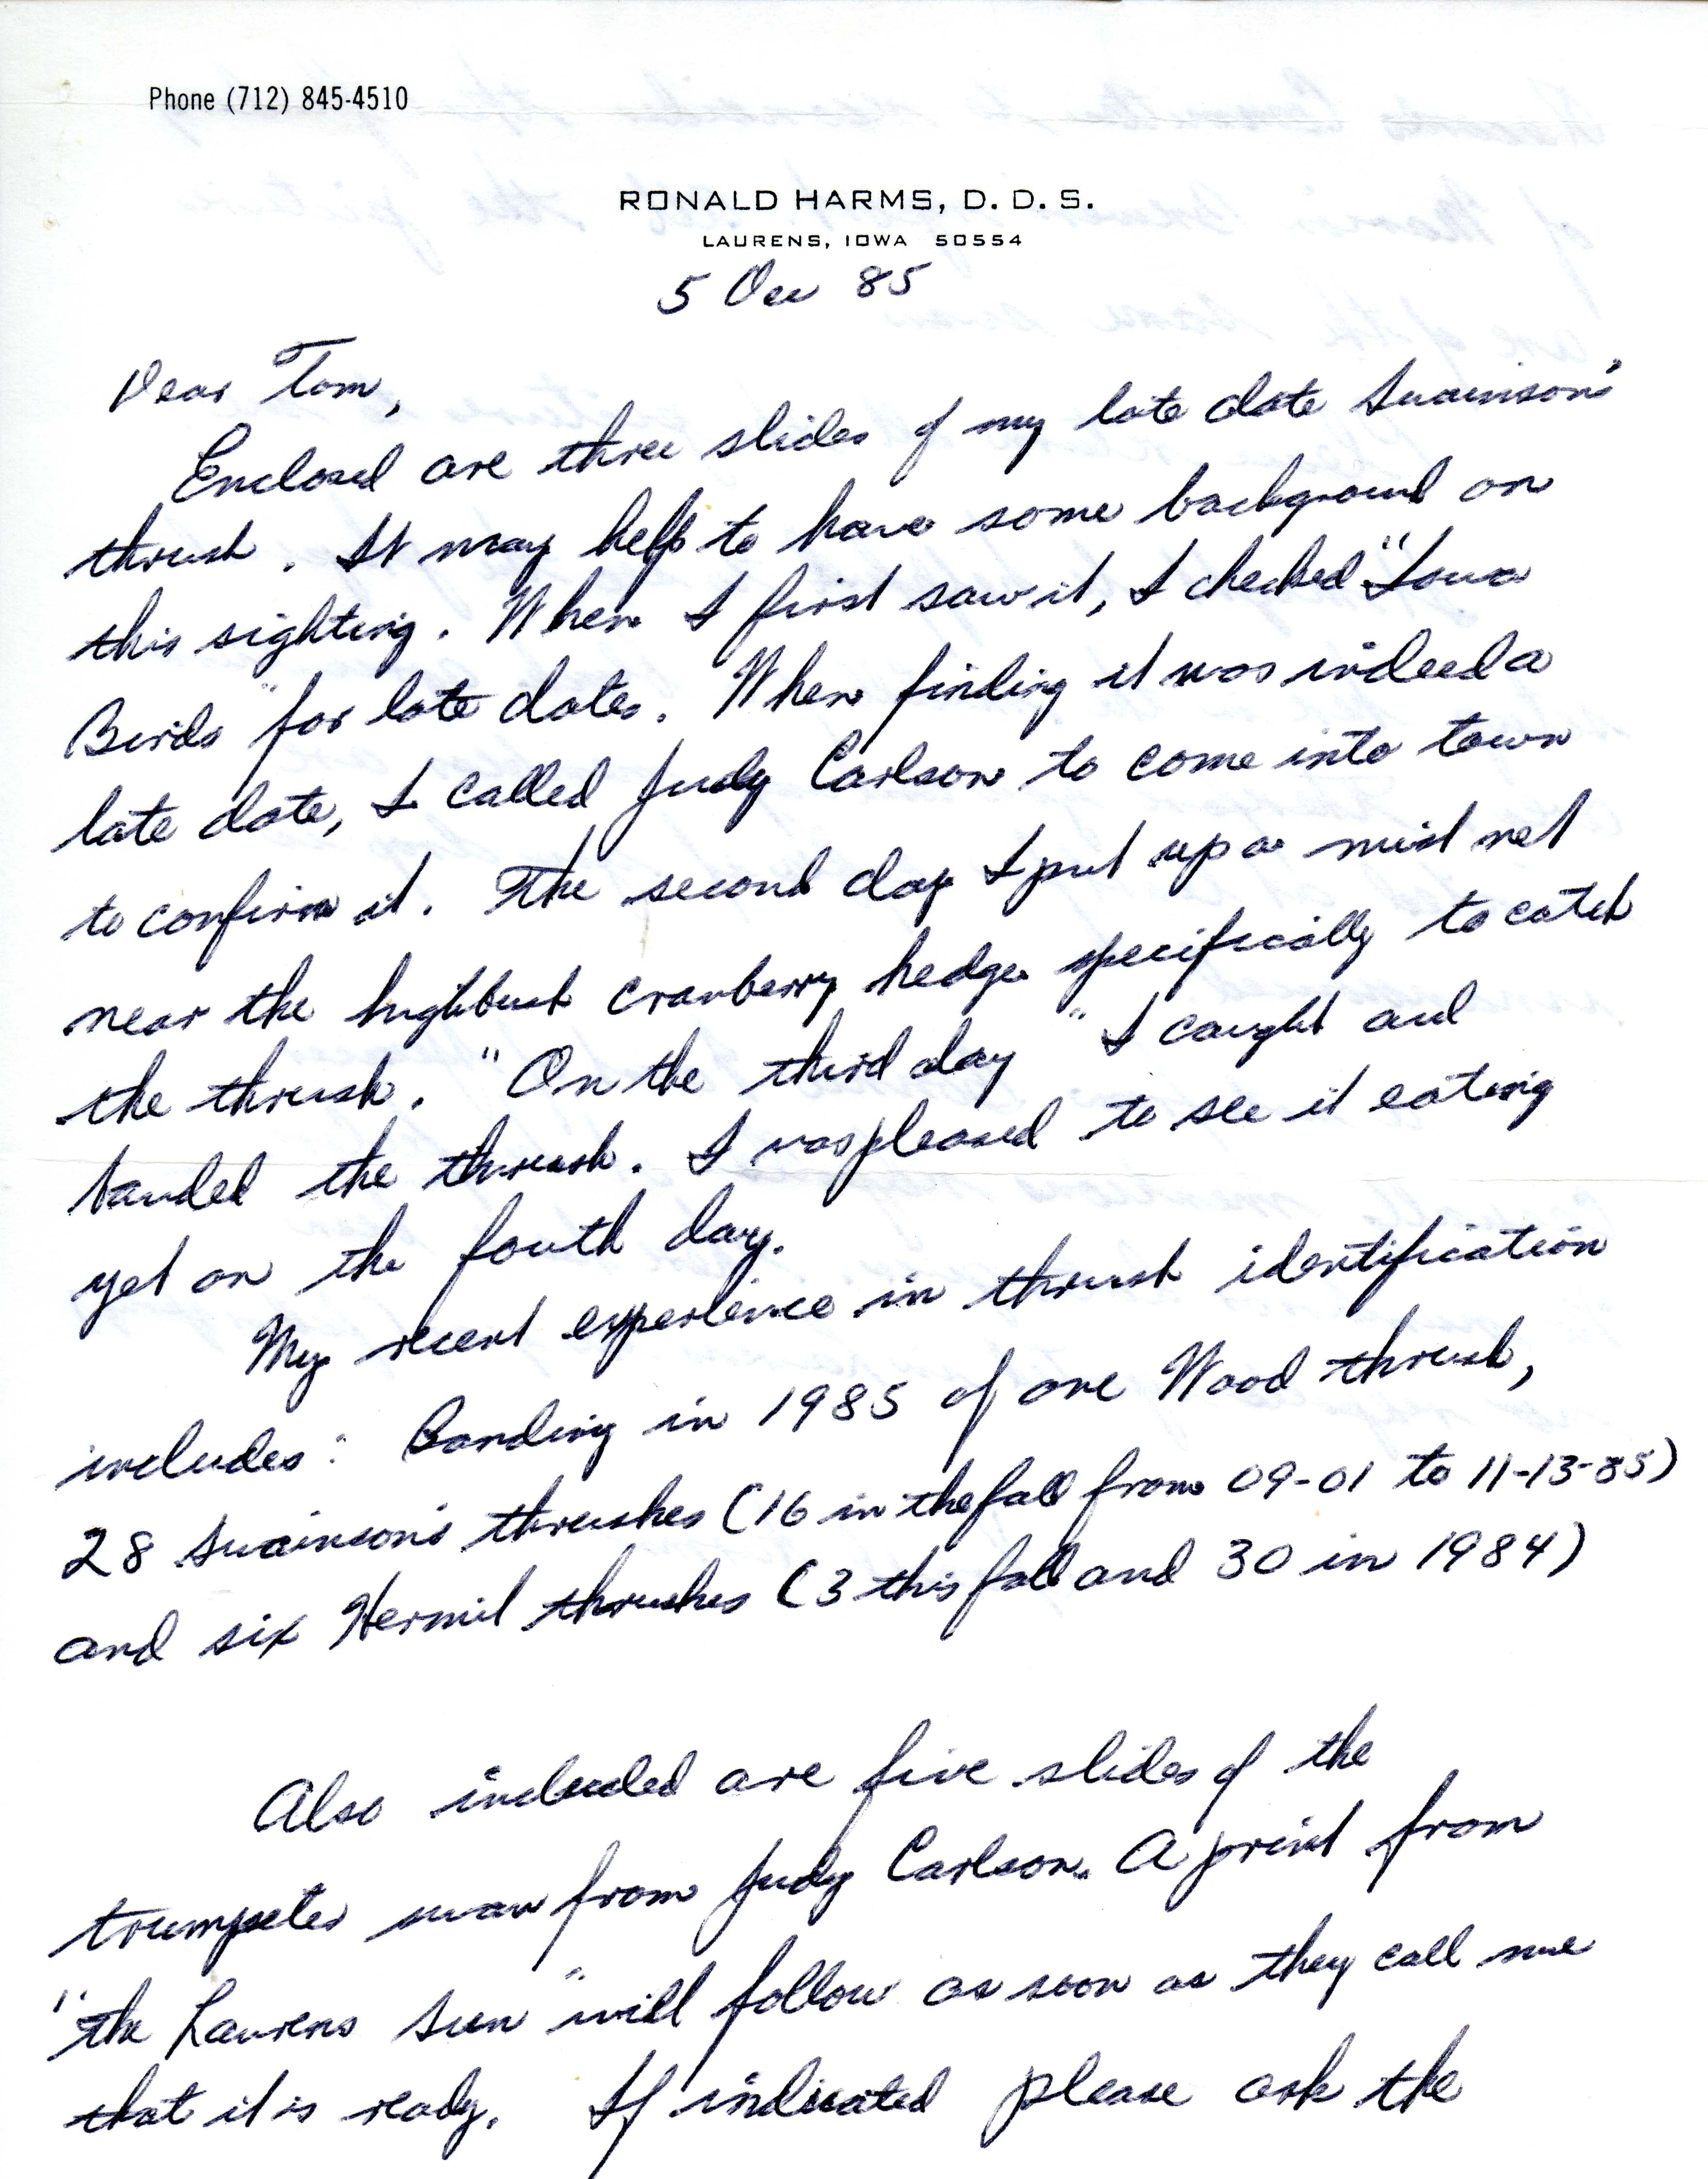 Ronald Harms letter to Thomas Kent regarding Swainson's Thrush, December 5, 1985